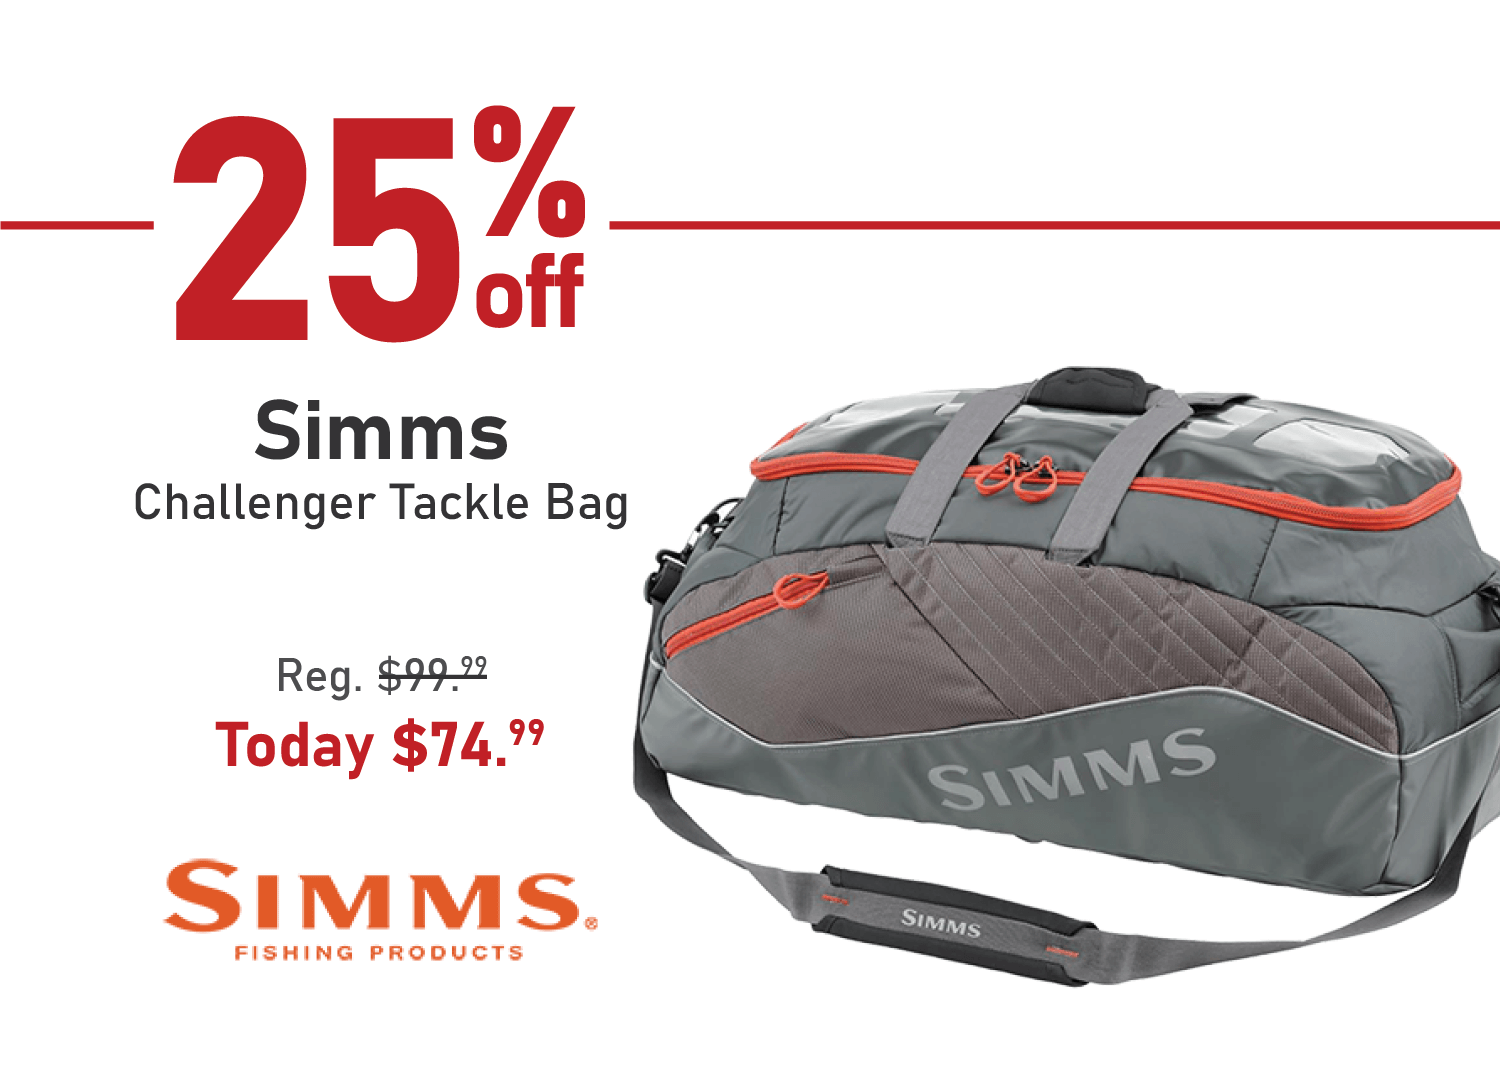 Save 25% on the Simms Challenger Tackle Bag